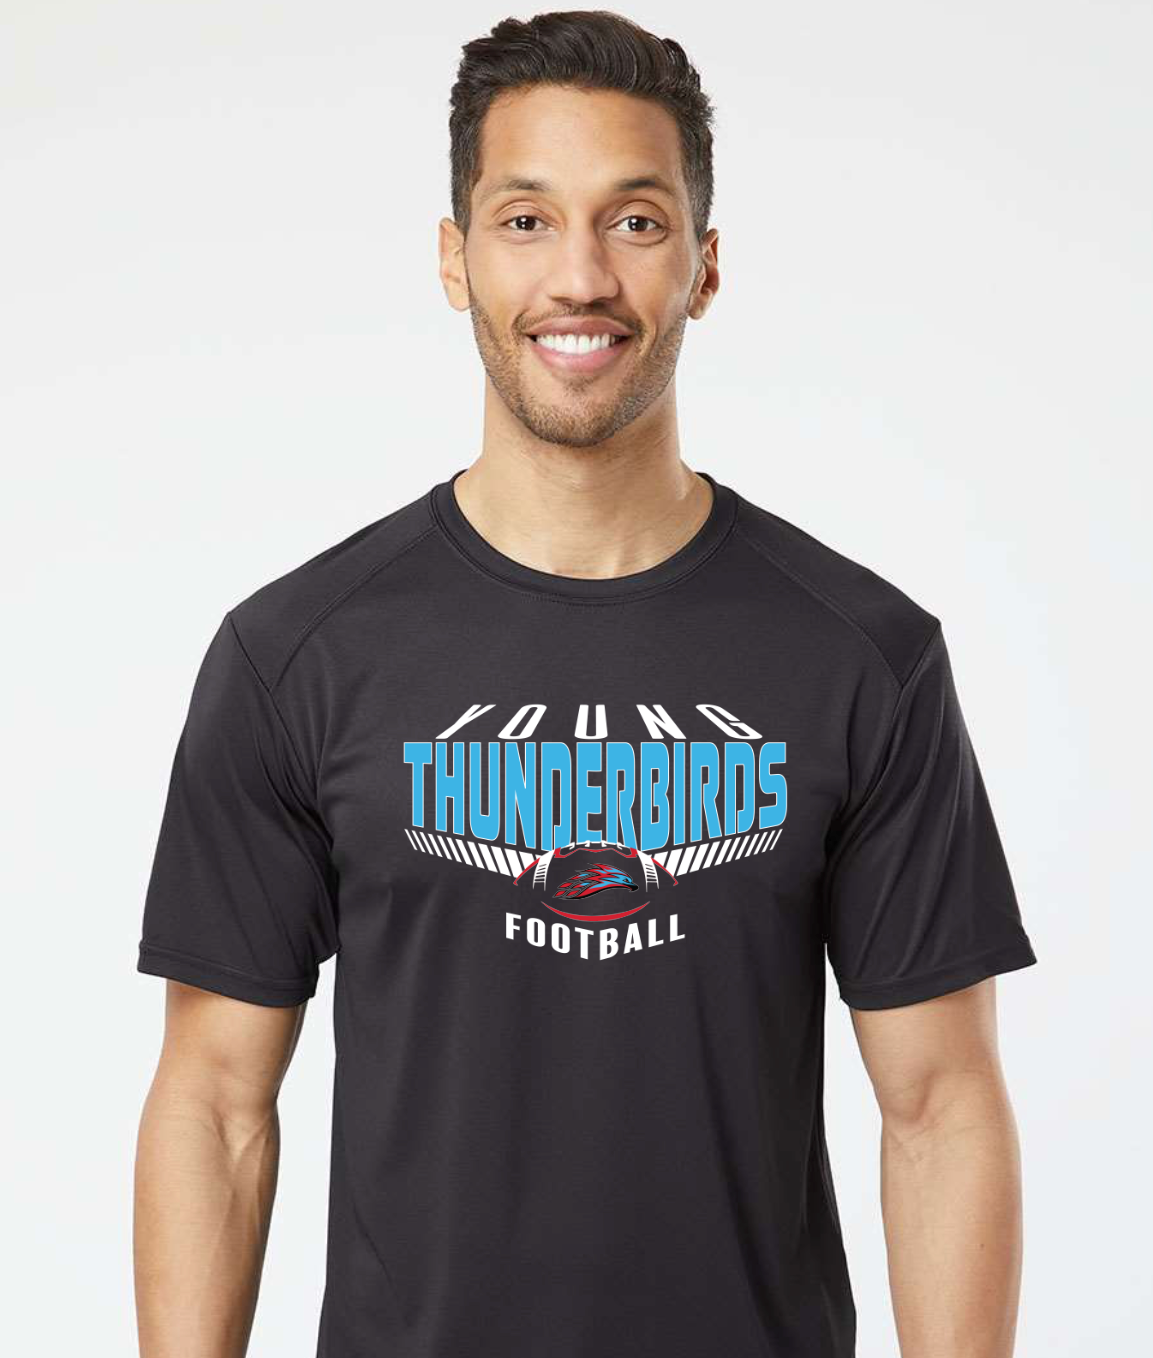 Thunderbirds Football Paragon Performance Shirt